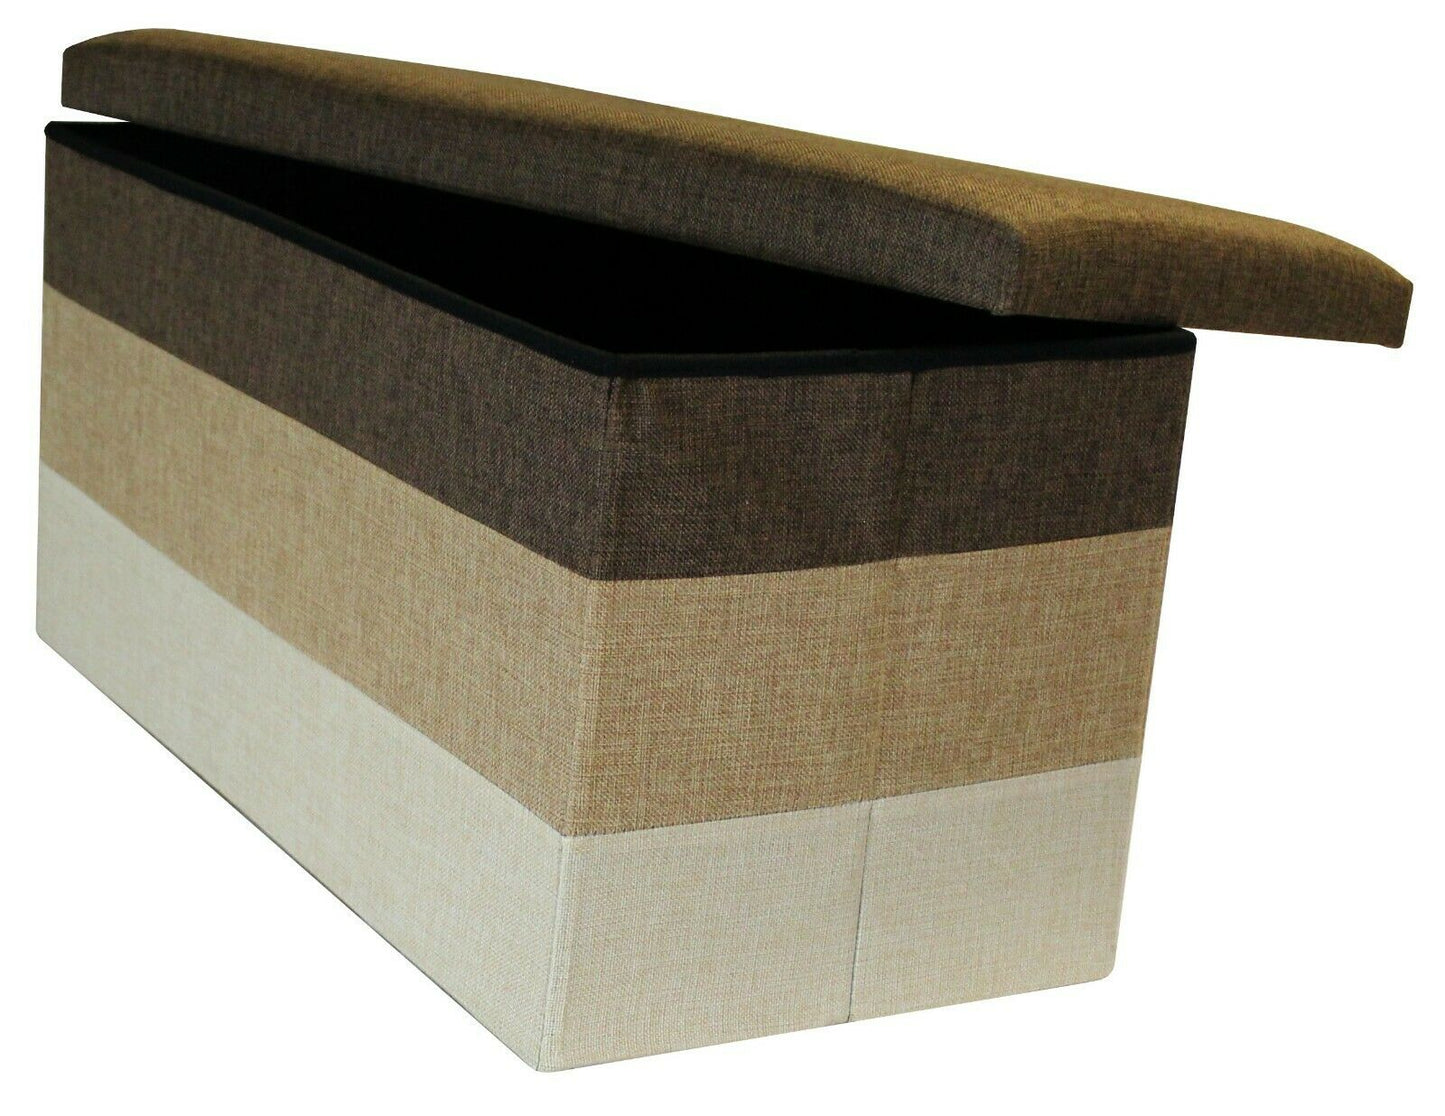 Large Linear Storage Ottoman Brown Beige Three Tone Foot Stool Seat Storage Box